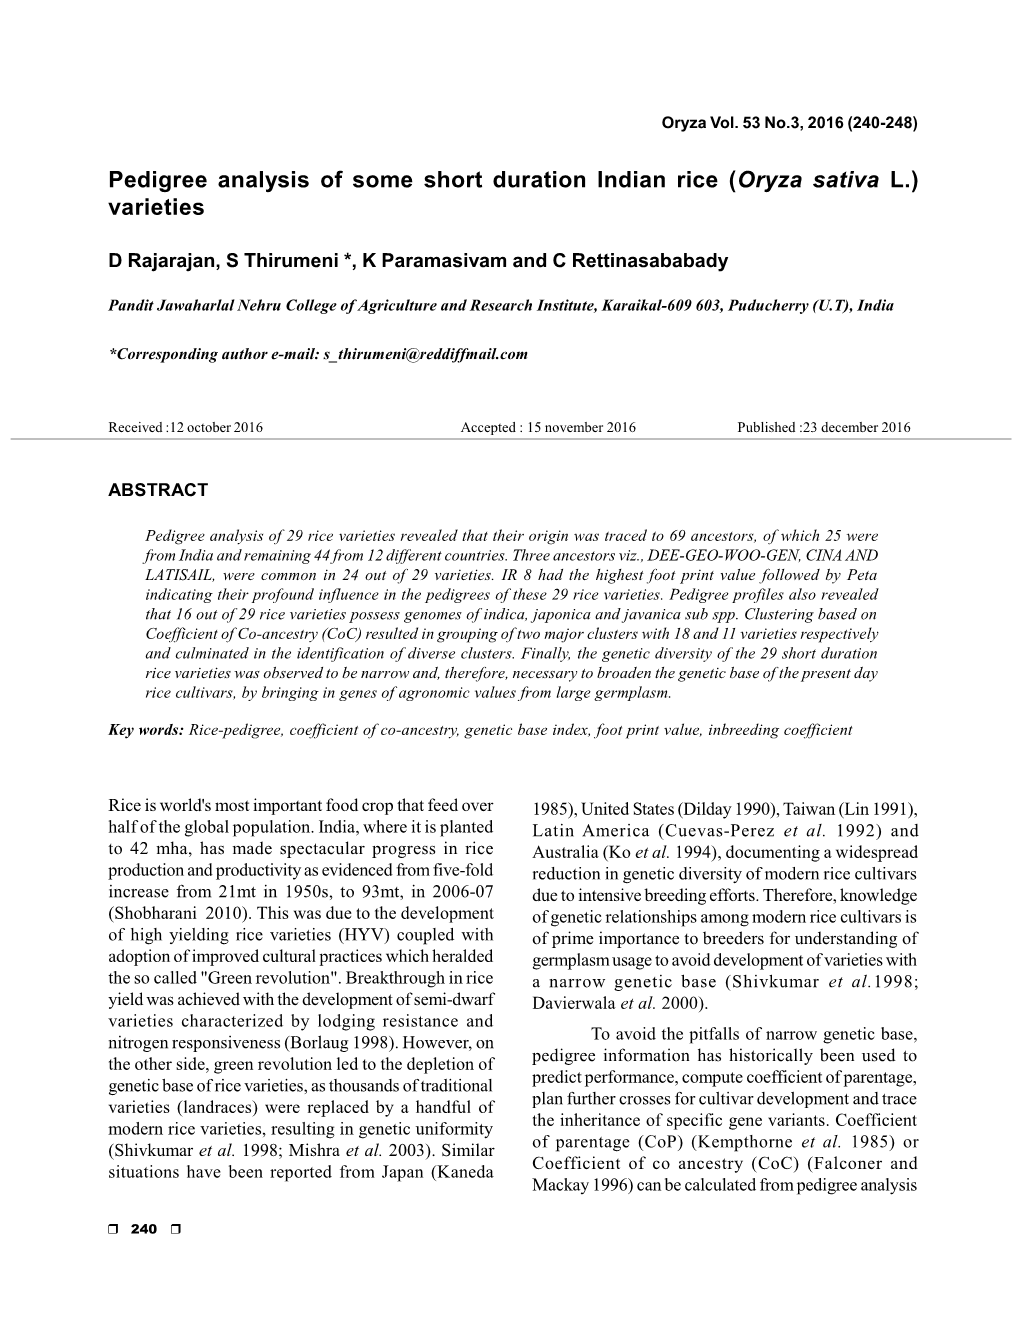 Pedigree Analysis of Some Short Duration Indian Rice (Oryza Sativa L.) Varieties